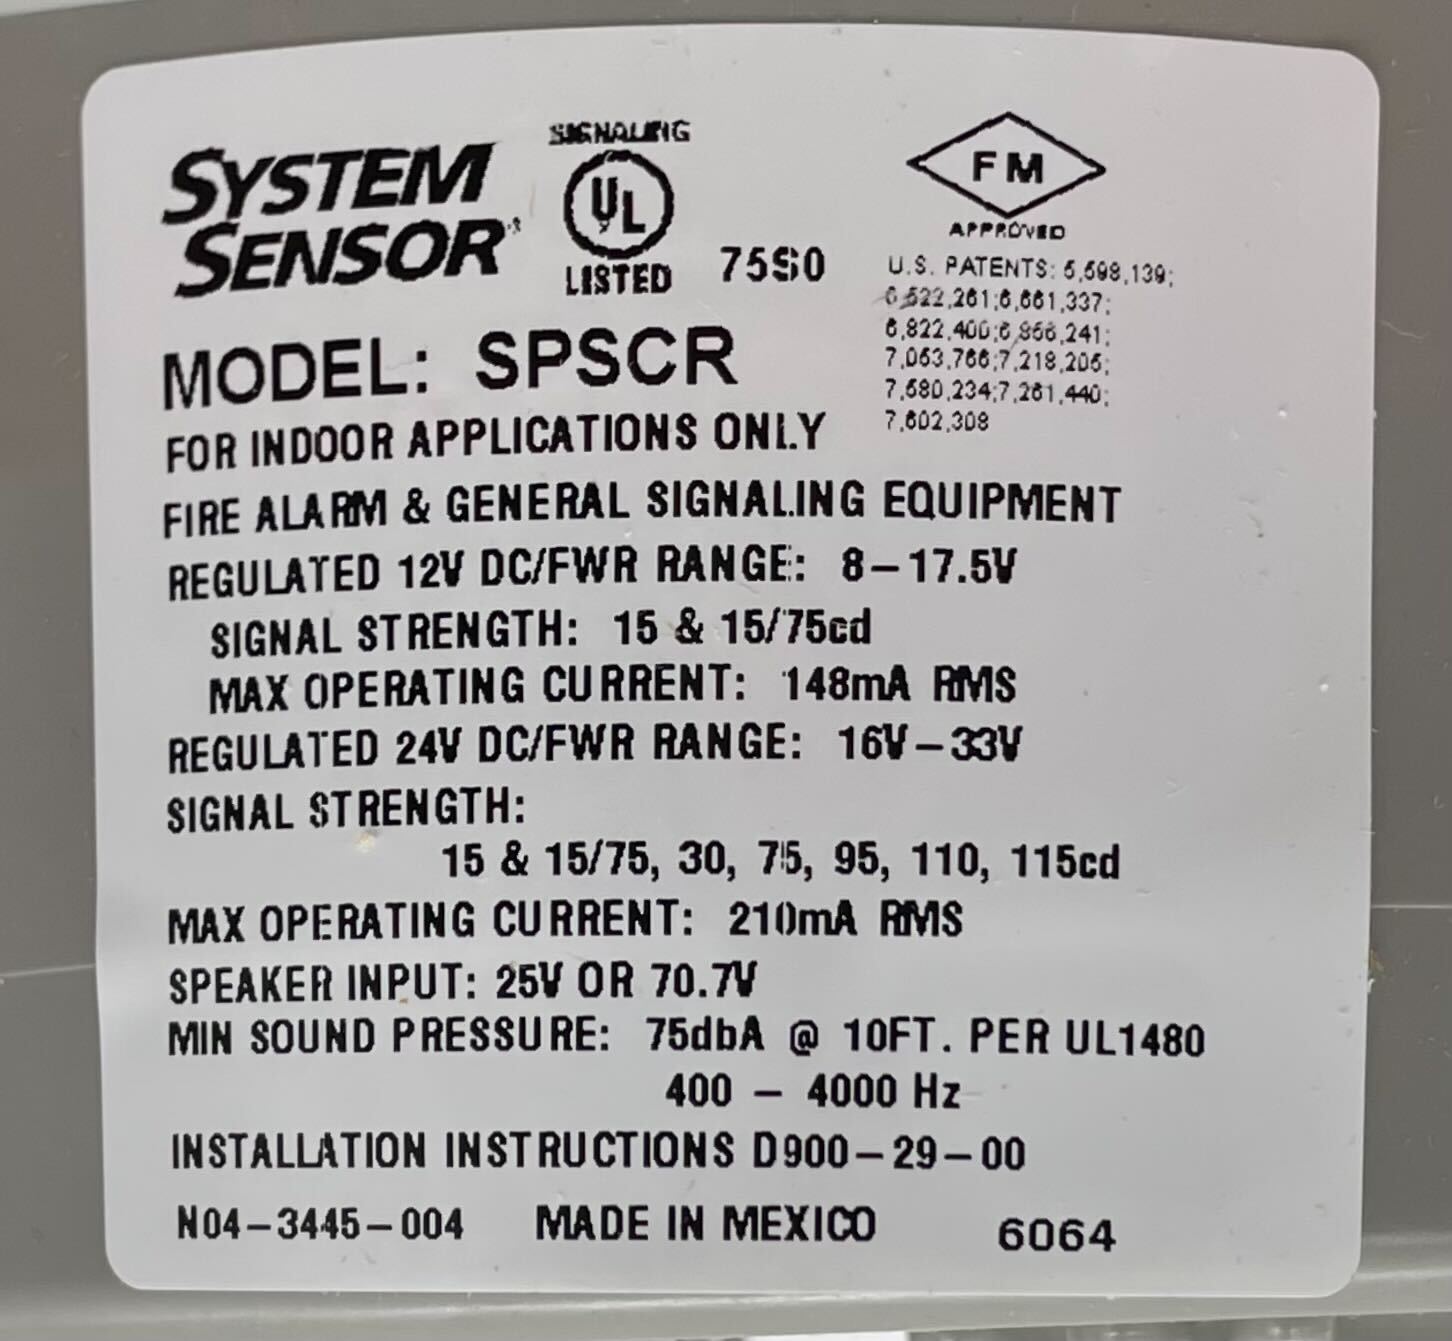 System Sensor SPSCR - The Fire Alarm Supplier